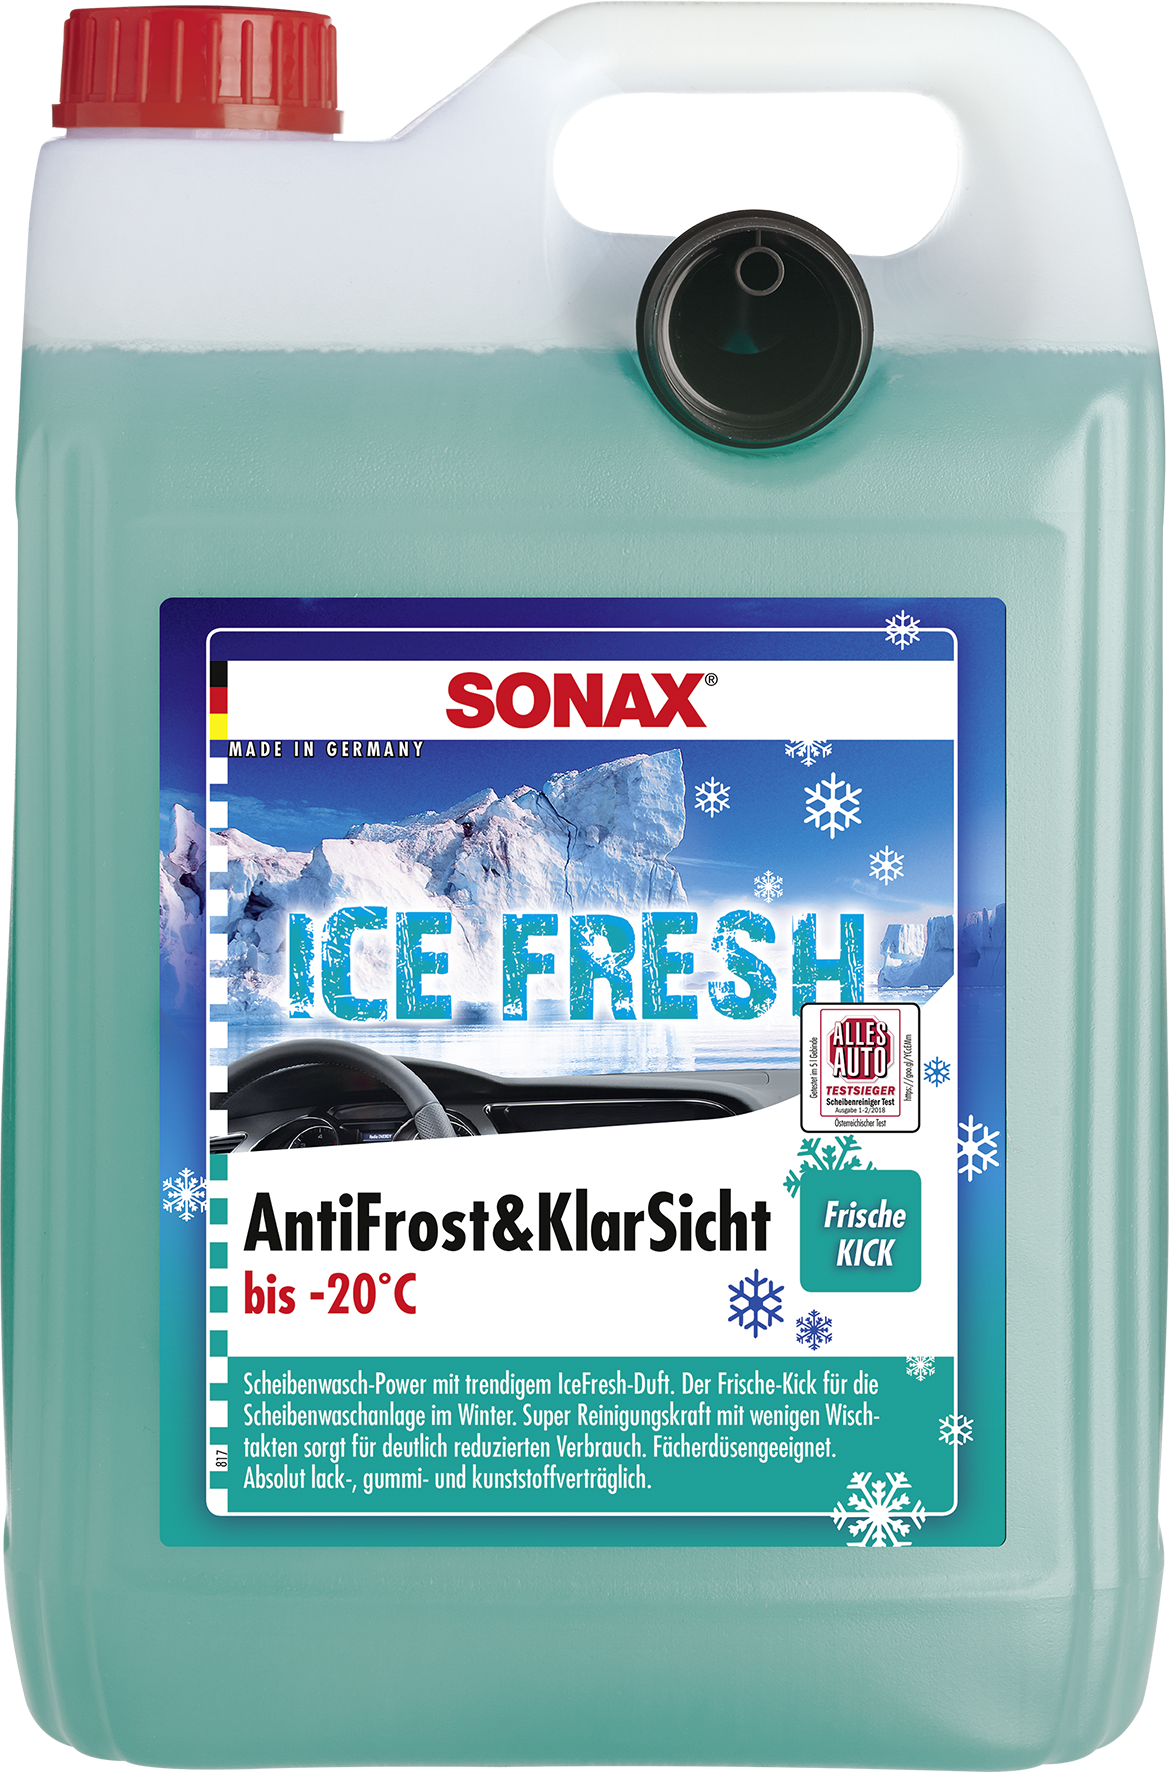 Sonax Antifrost & Klarsicht Winterbeast gebrauchsfertig 5 l